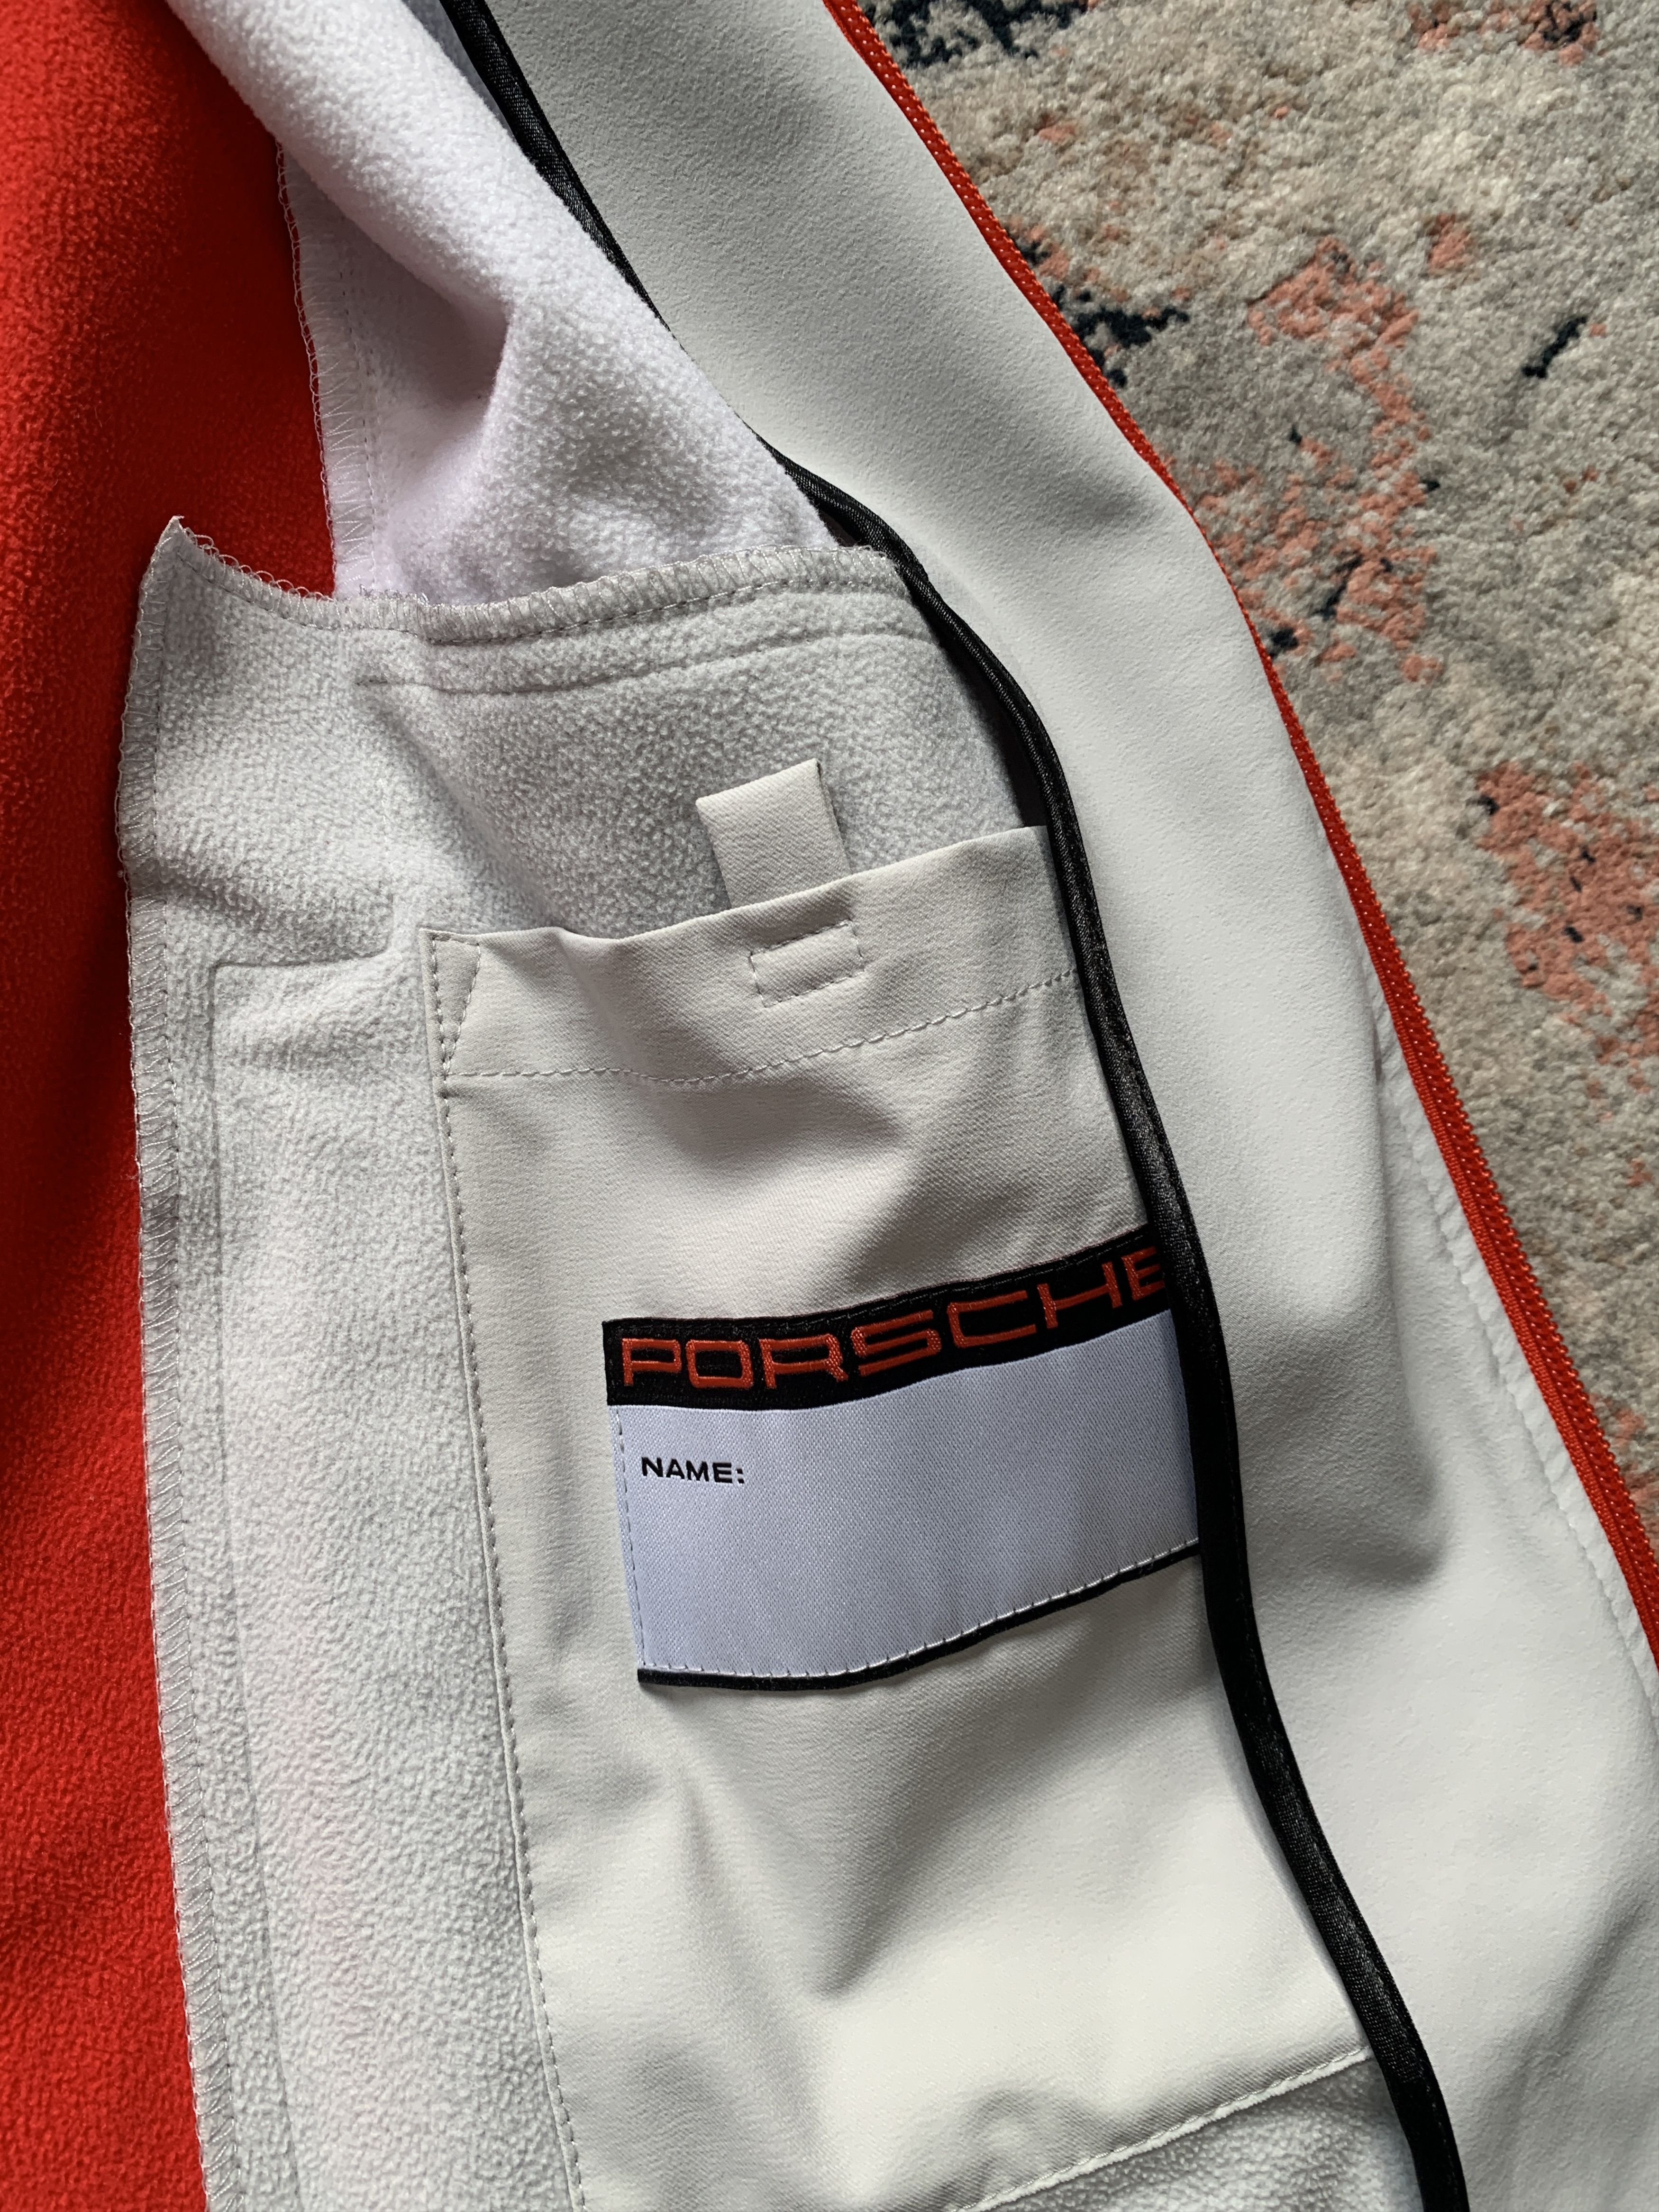 Adidas Adidas Porsche Motorsport Vest Size US XL / EU 56 / 4 - 11 Preview